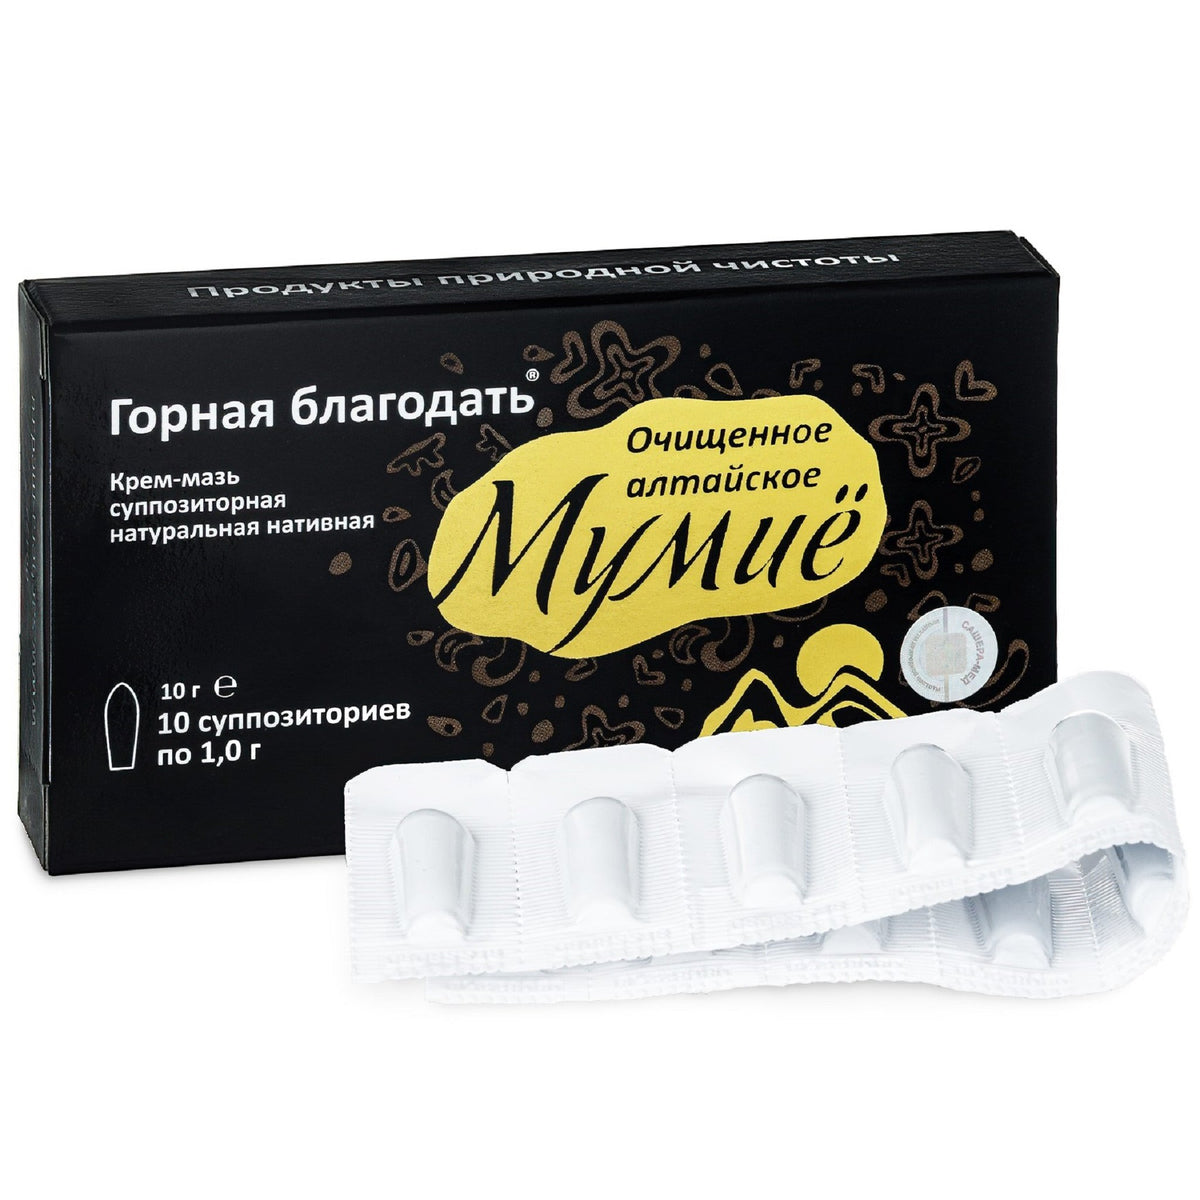 Pure Premium Shilajit Cream Balm ‘Mountain Grace’ Cylindrical Capsule Form 10 grams (10 units x 1 gram each)